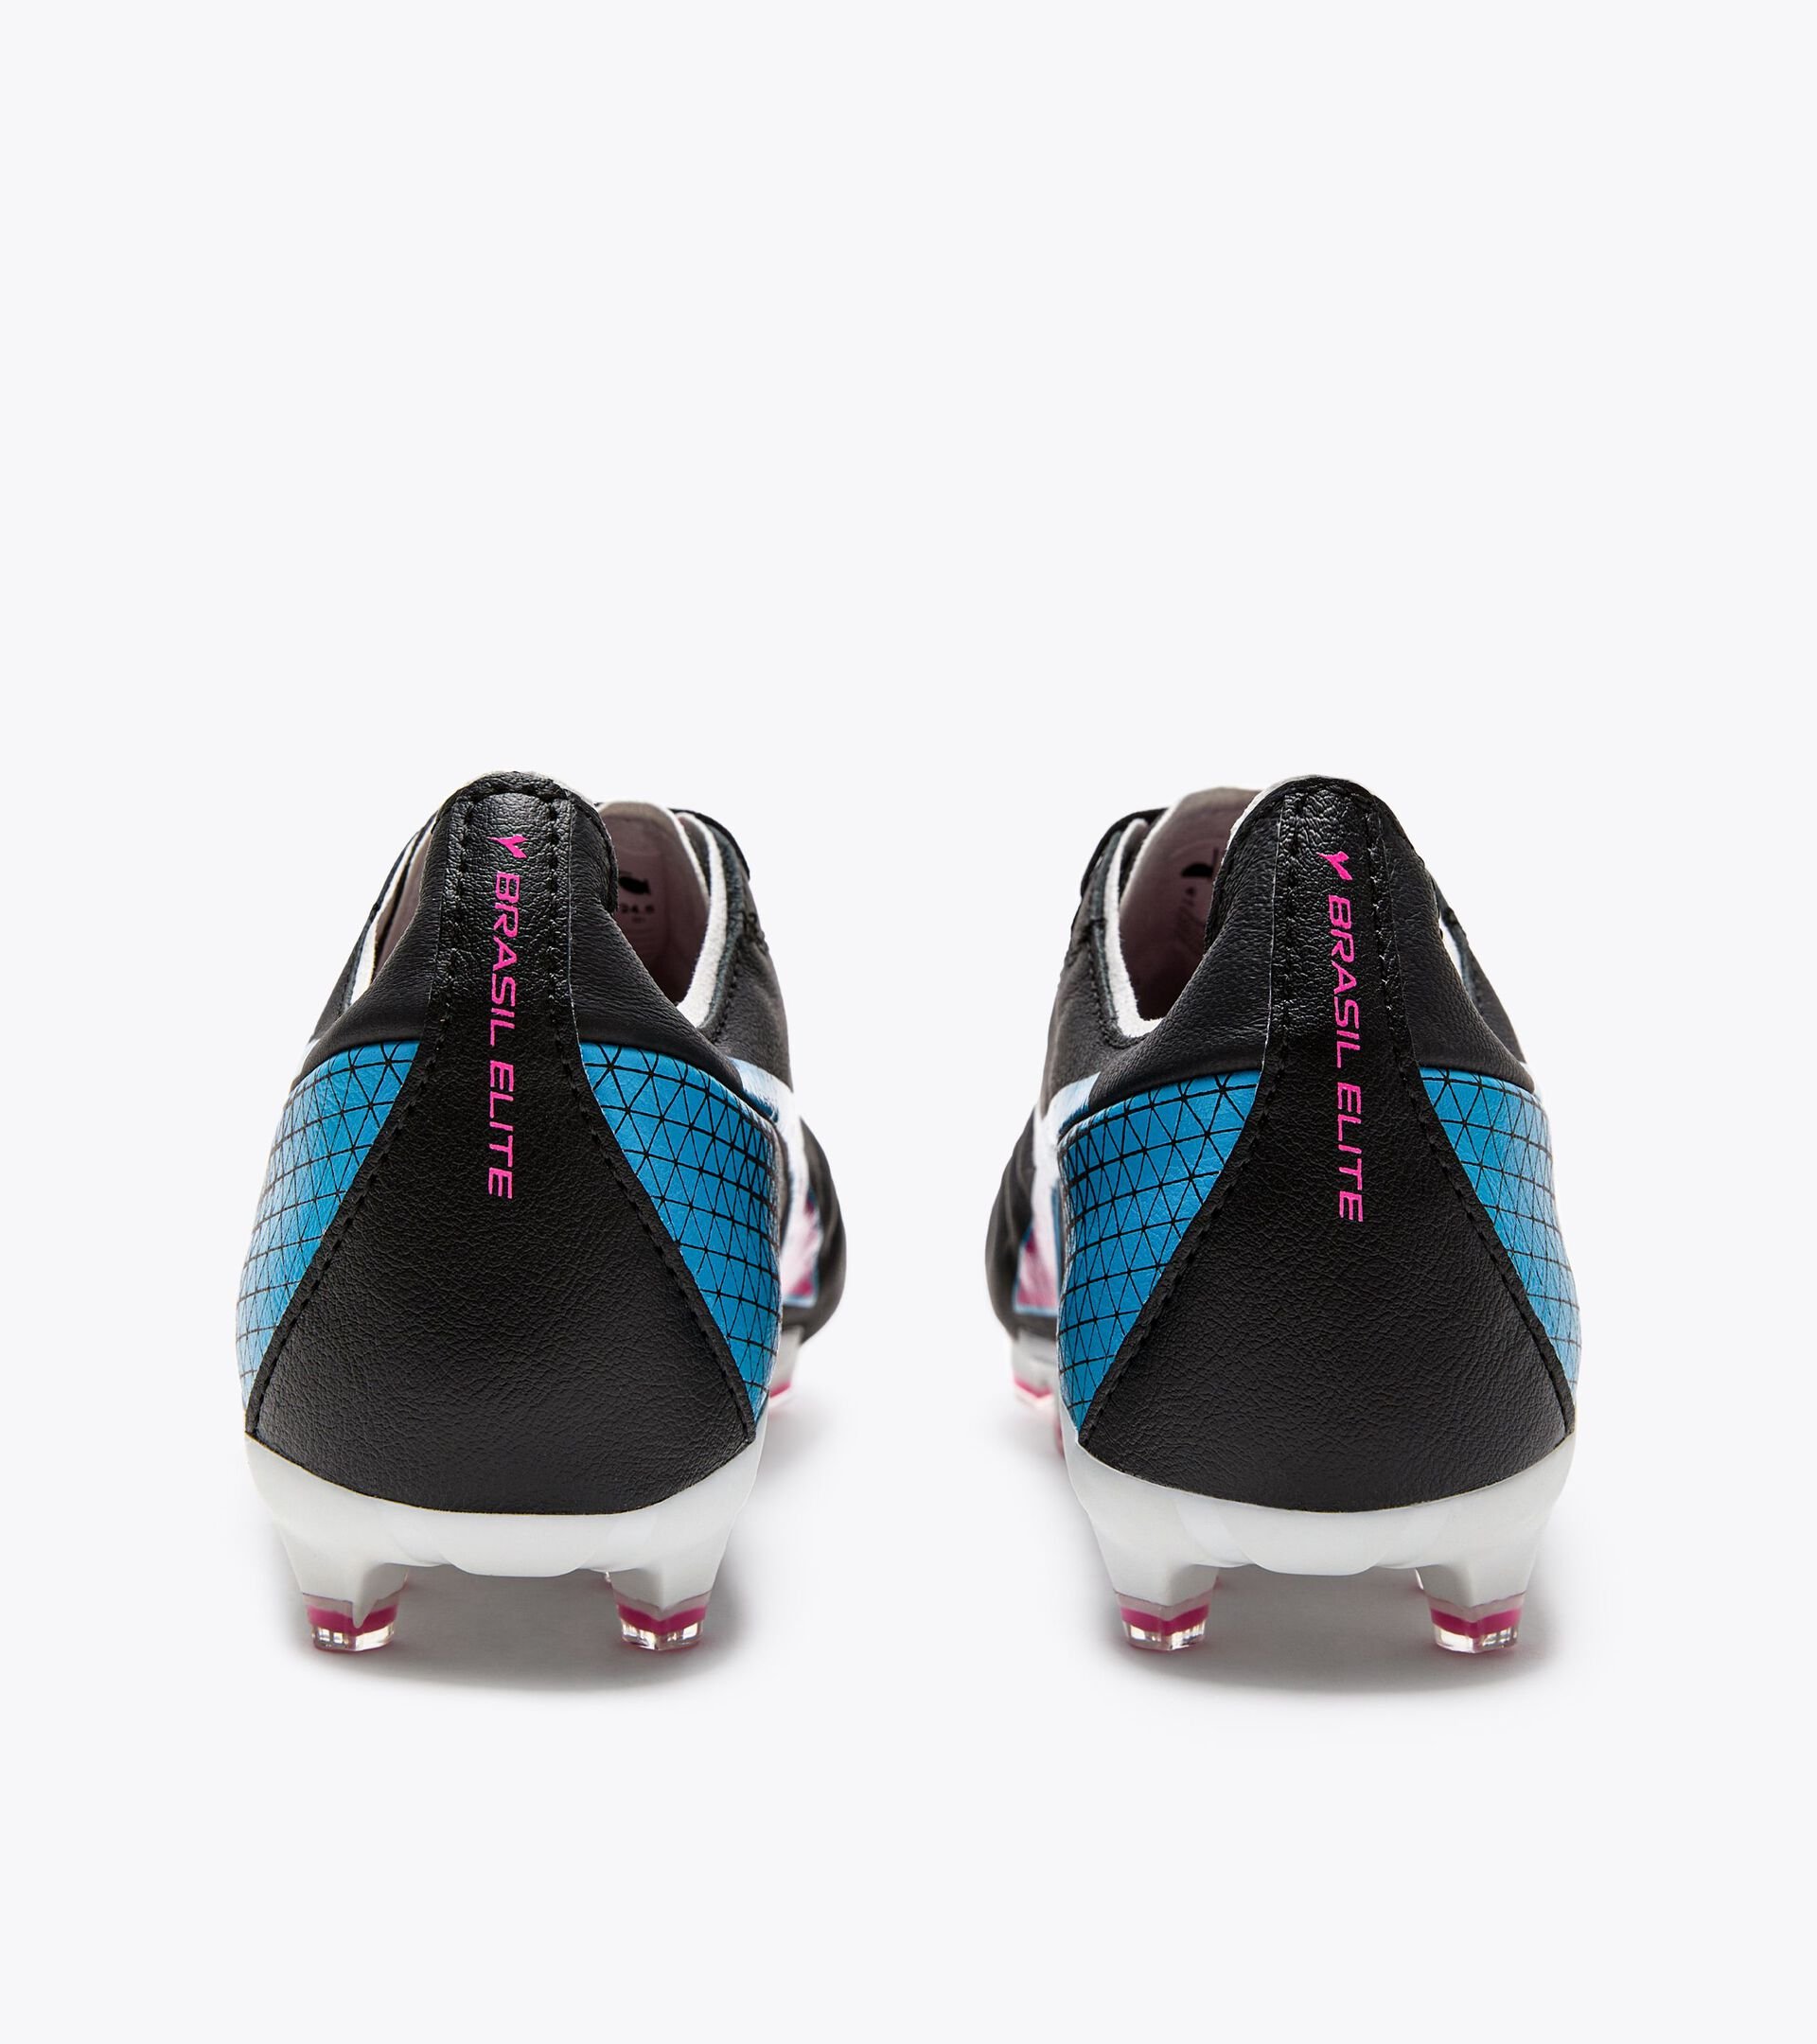 Chaussures de football pour terrains compacts - Femme BRASIL ELITE GR LT W LP12 NOIR/ROSE FL/CYAN BLEU FLUO - Diadora